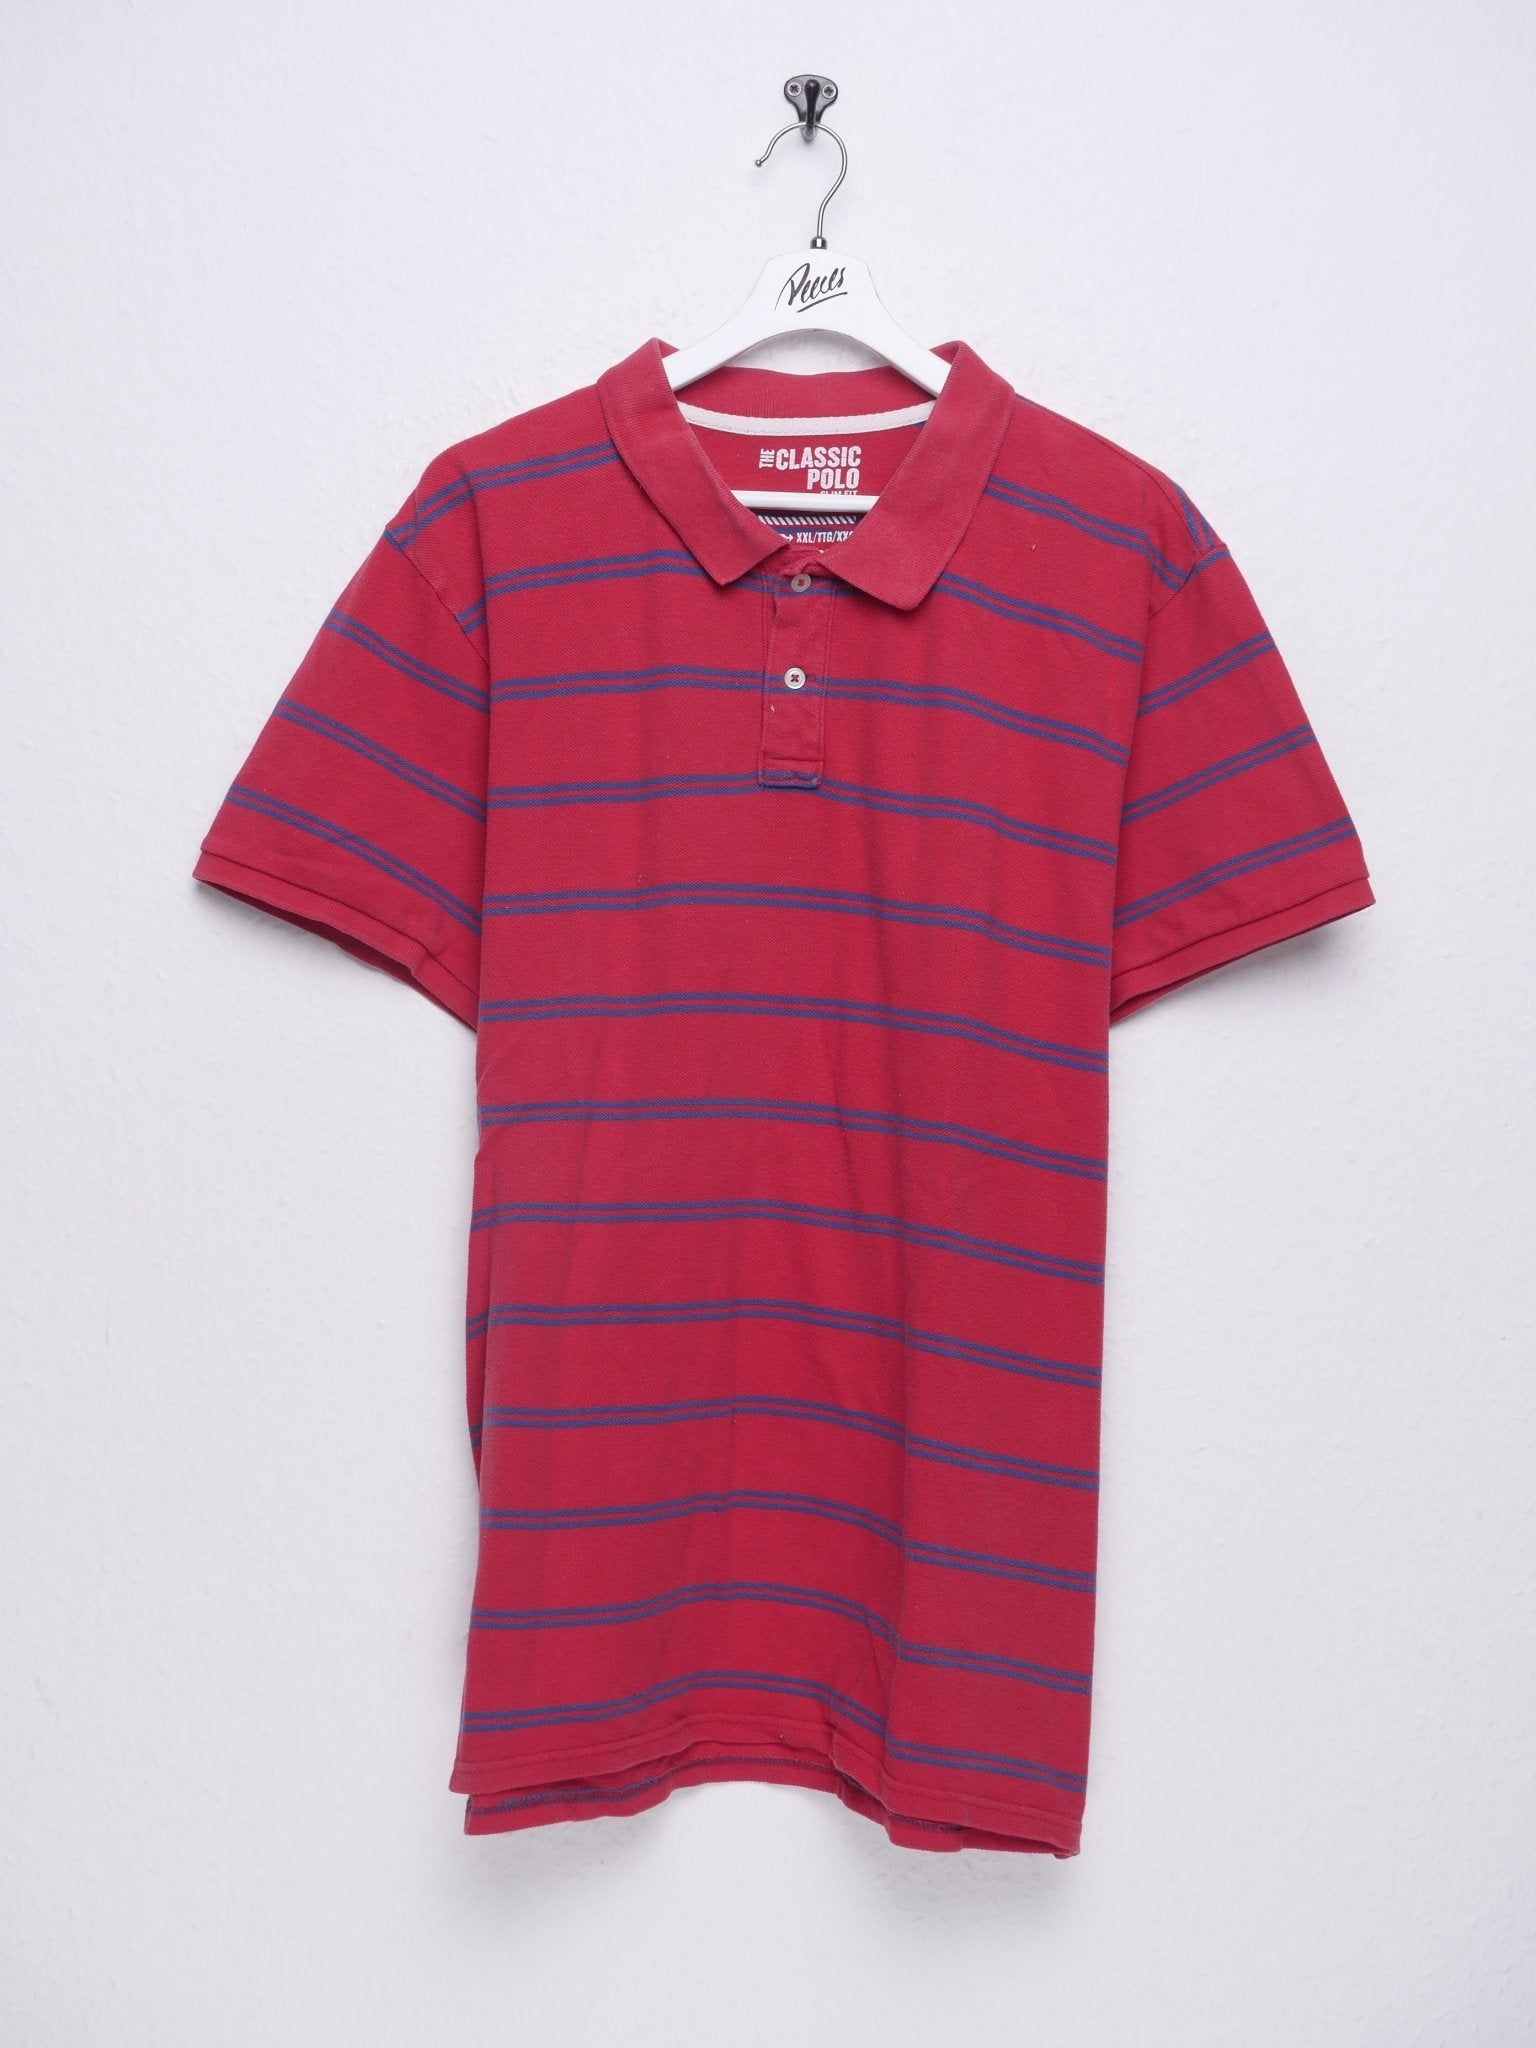 Vintage striped Polo Shirt - Peeces